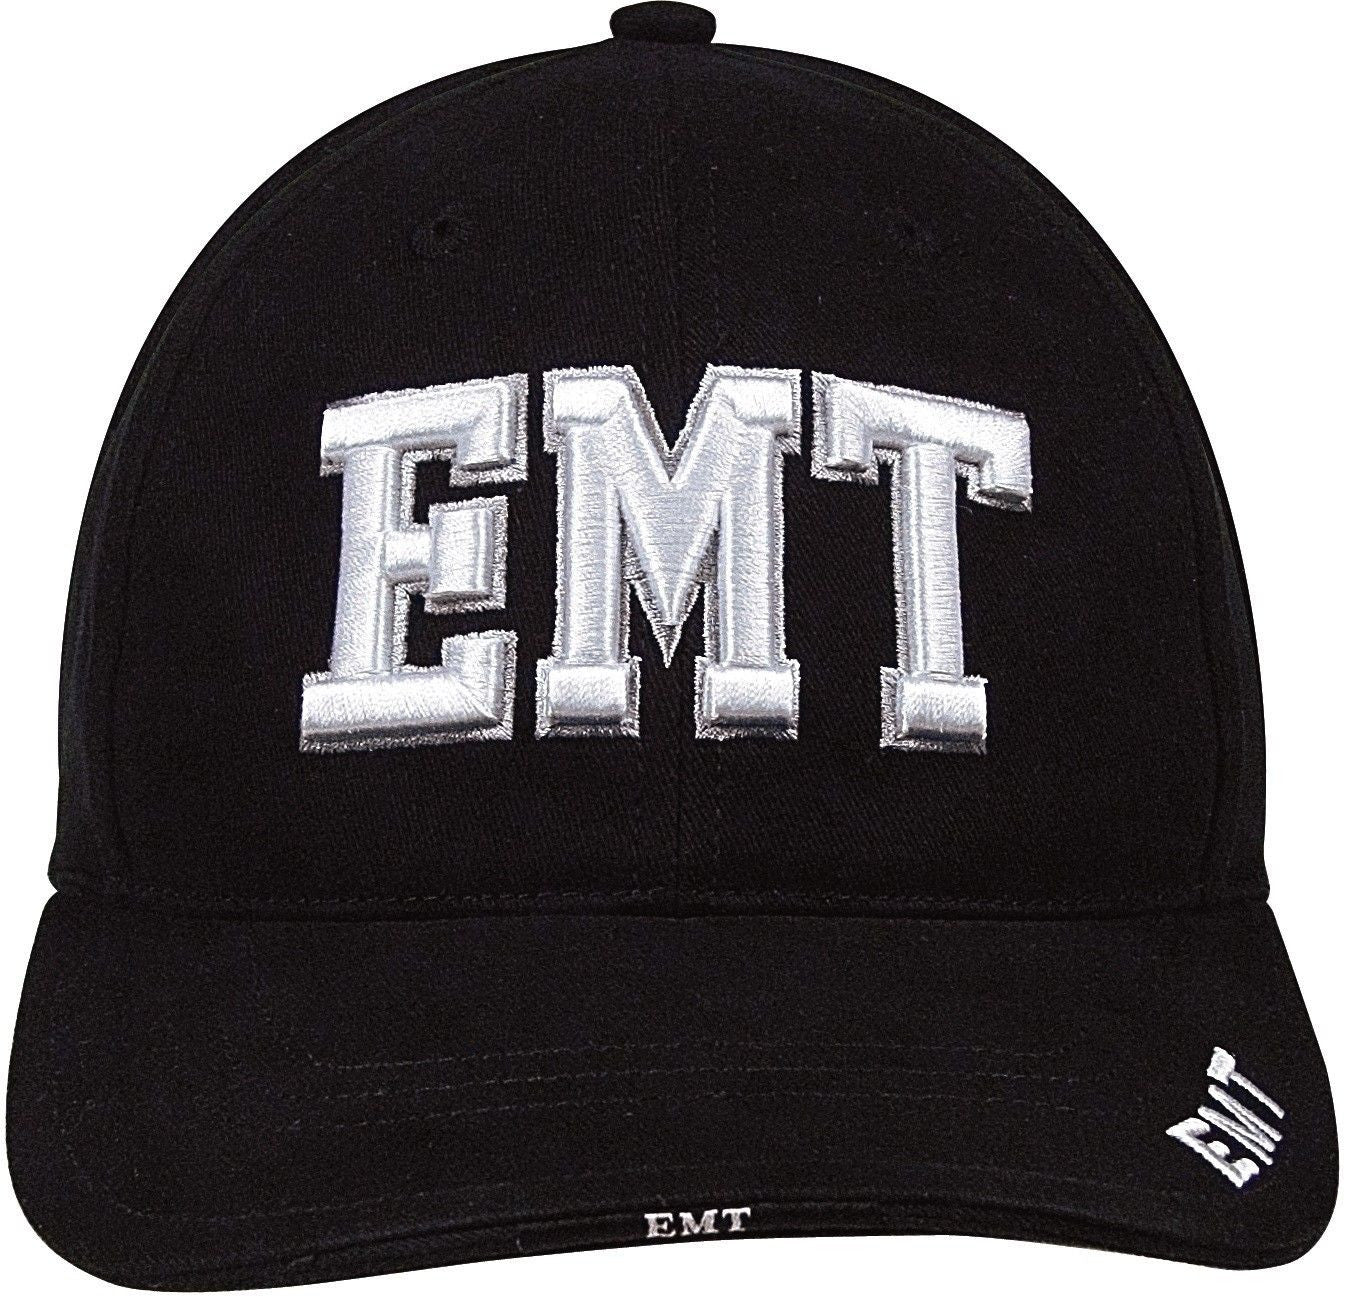 "E.M.T" - Black - Deluxe Low Profile Baseball Cap